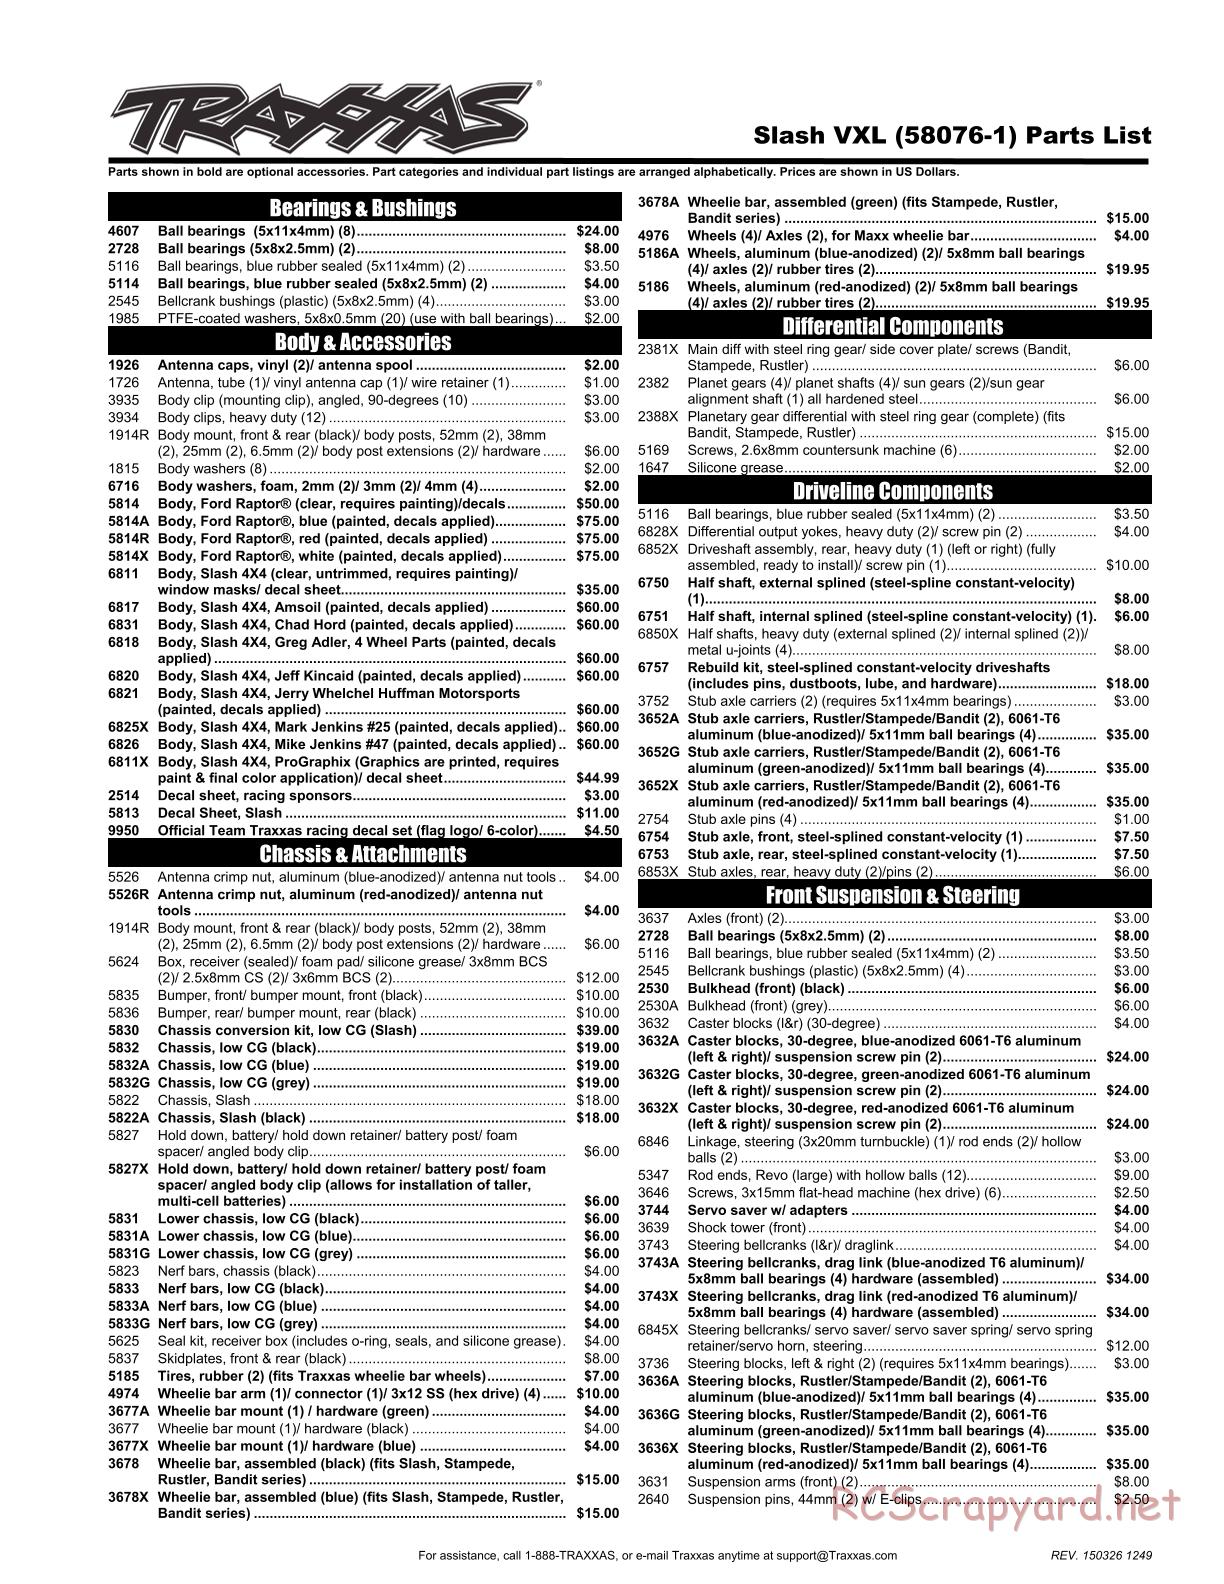 Traxxas - Slash 2WD VXL (2015) - Parts List - Page 1